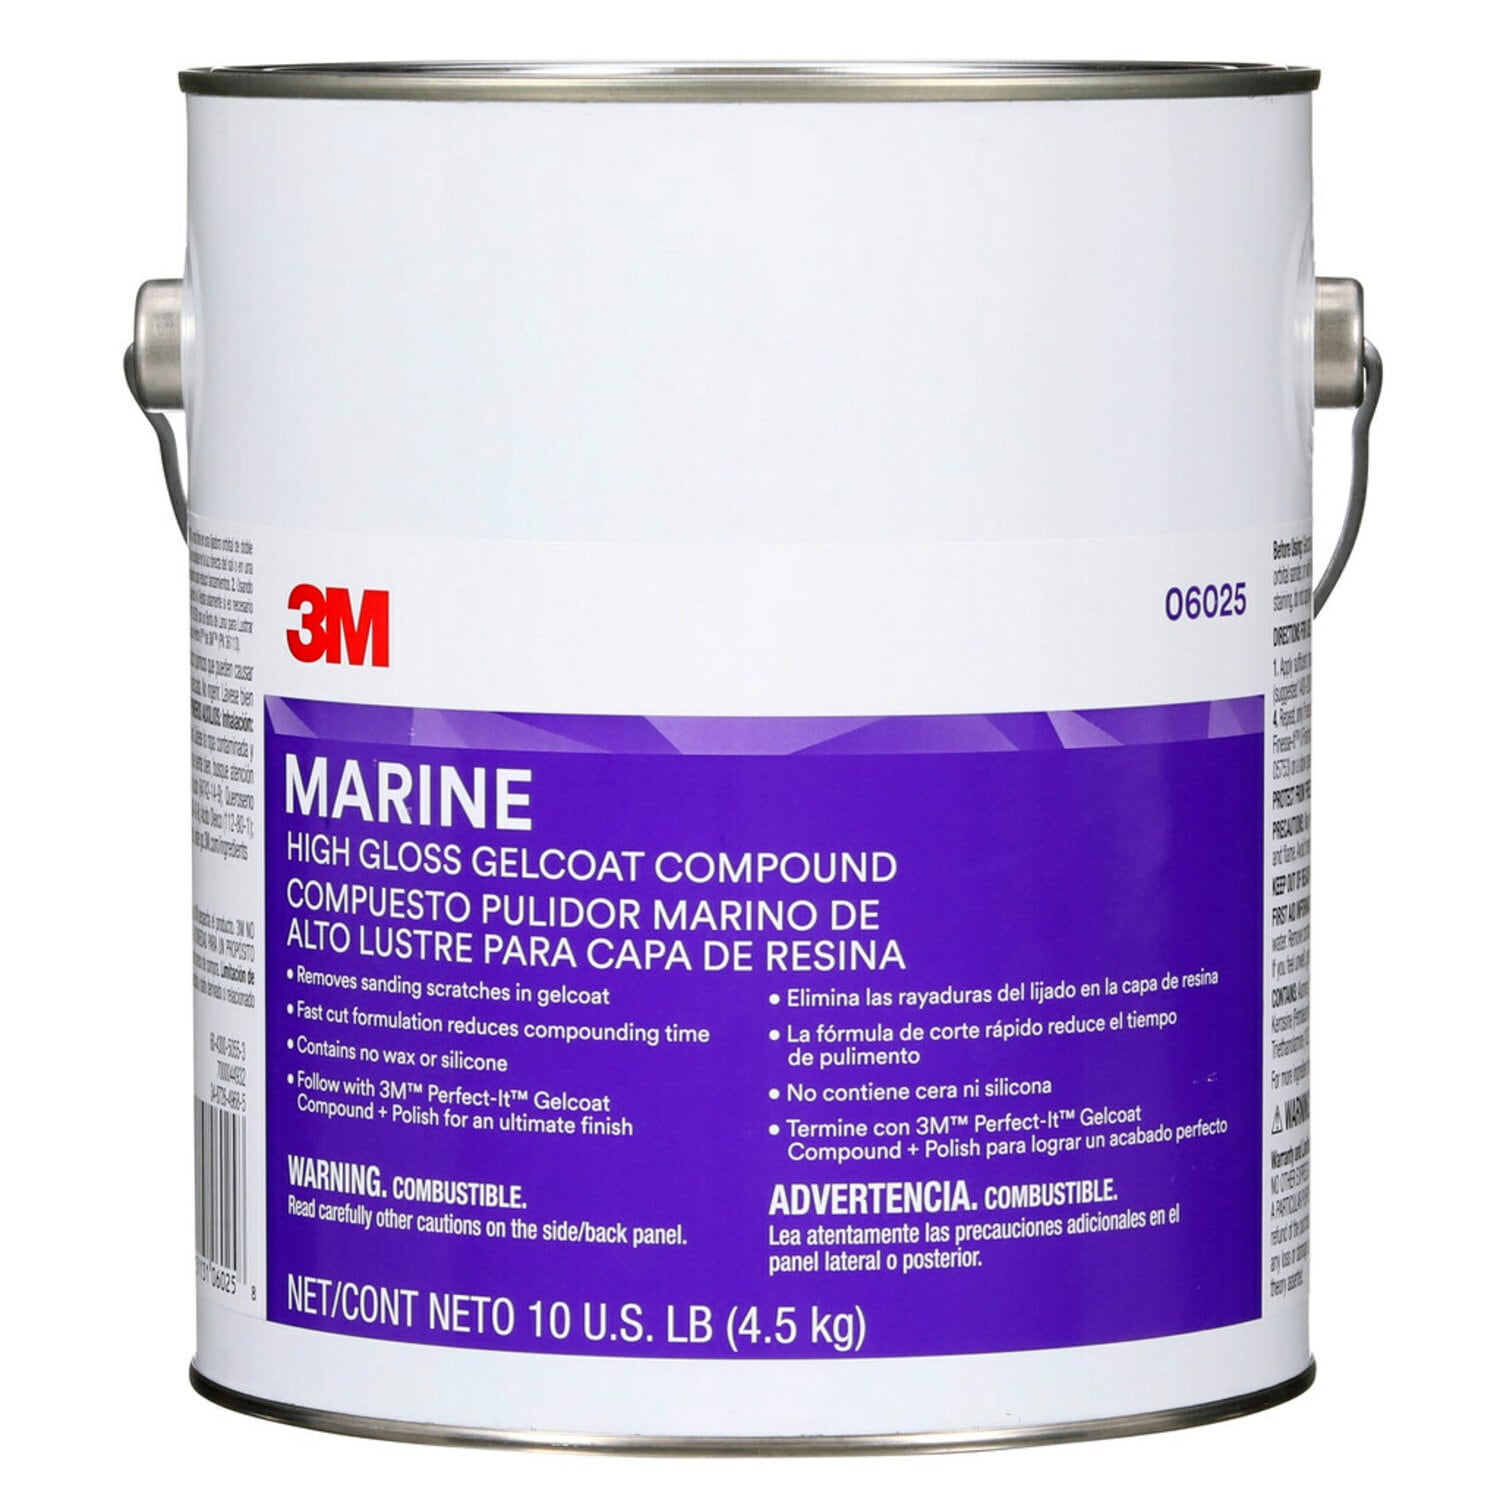 7000044932 - 3M Marine High Gloss Gelcoat Compound, 06025, 10 lb, 4 per case